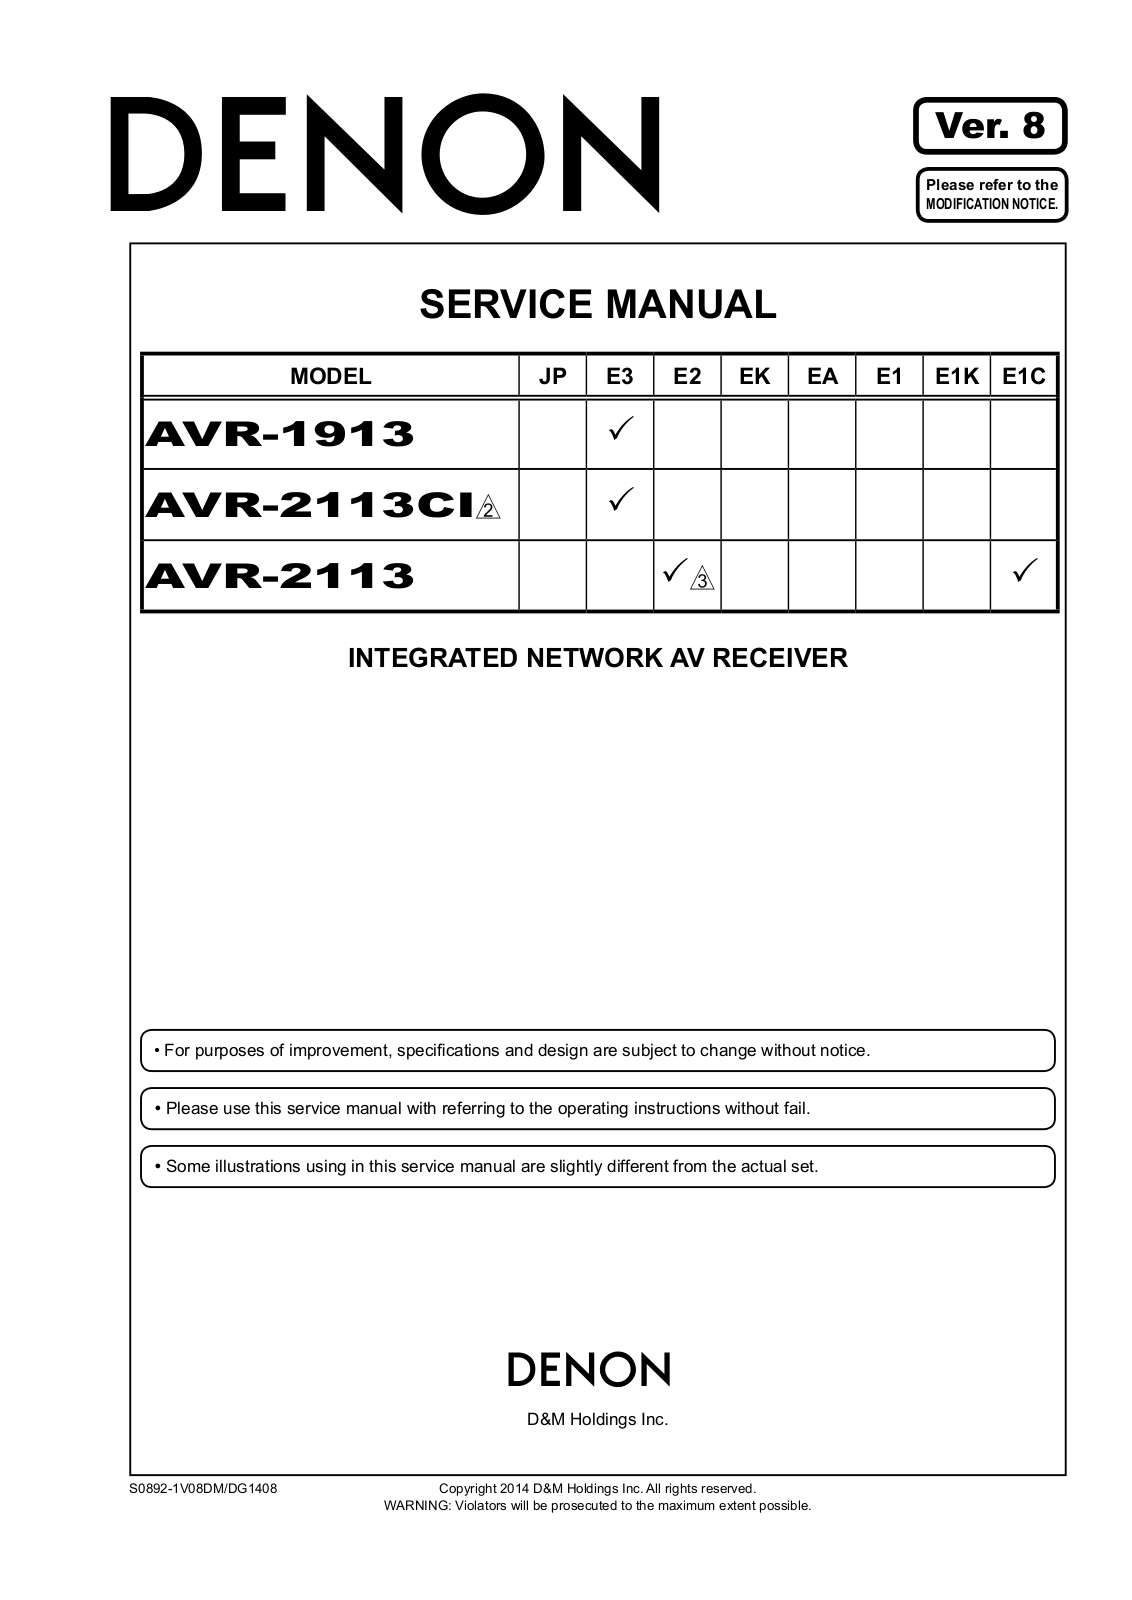 denon AVR-1913, AVR-2113CI, AVR-2113 Service Manual